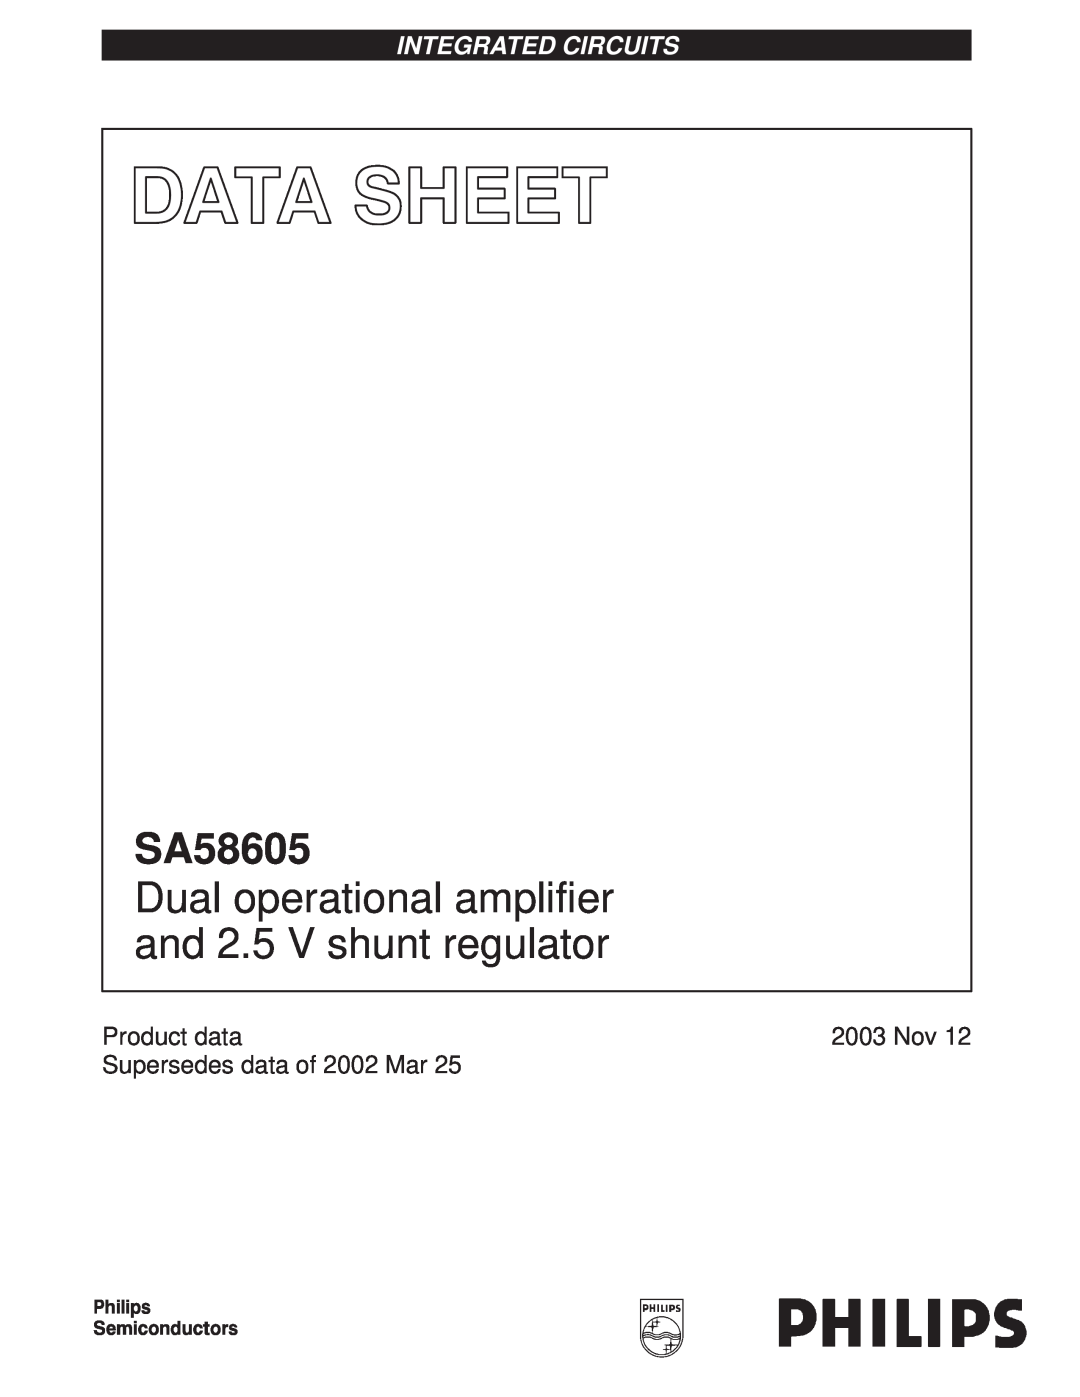 Philips SA58605 manual Product data, Supersedes data of 2002 Mar, Ps onos, Integrated Circuits, 2003 Nov 